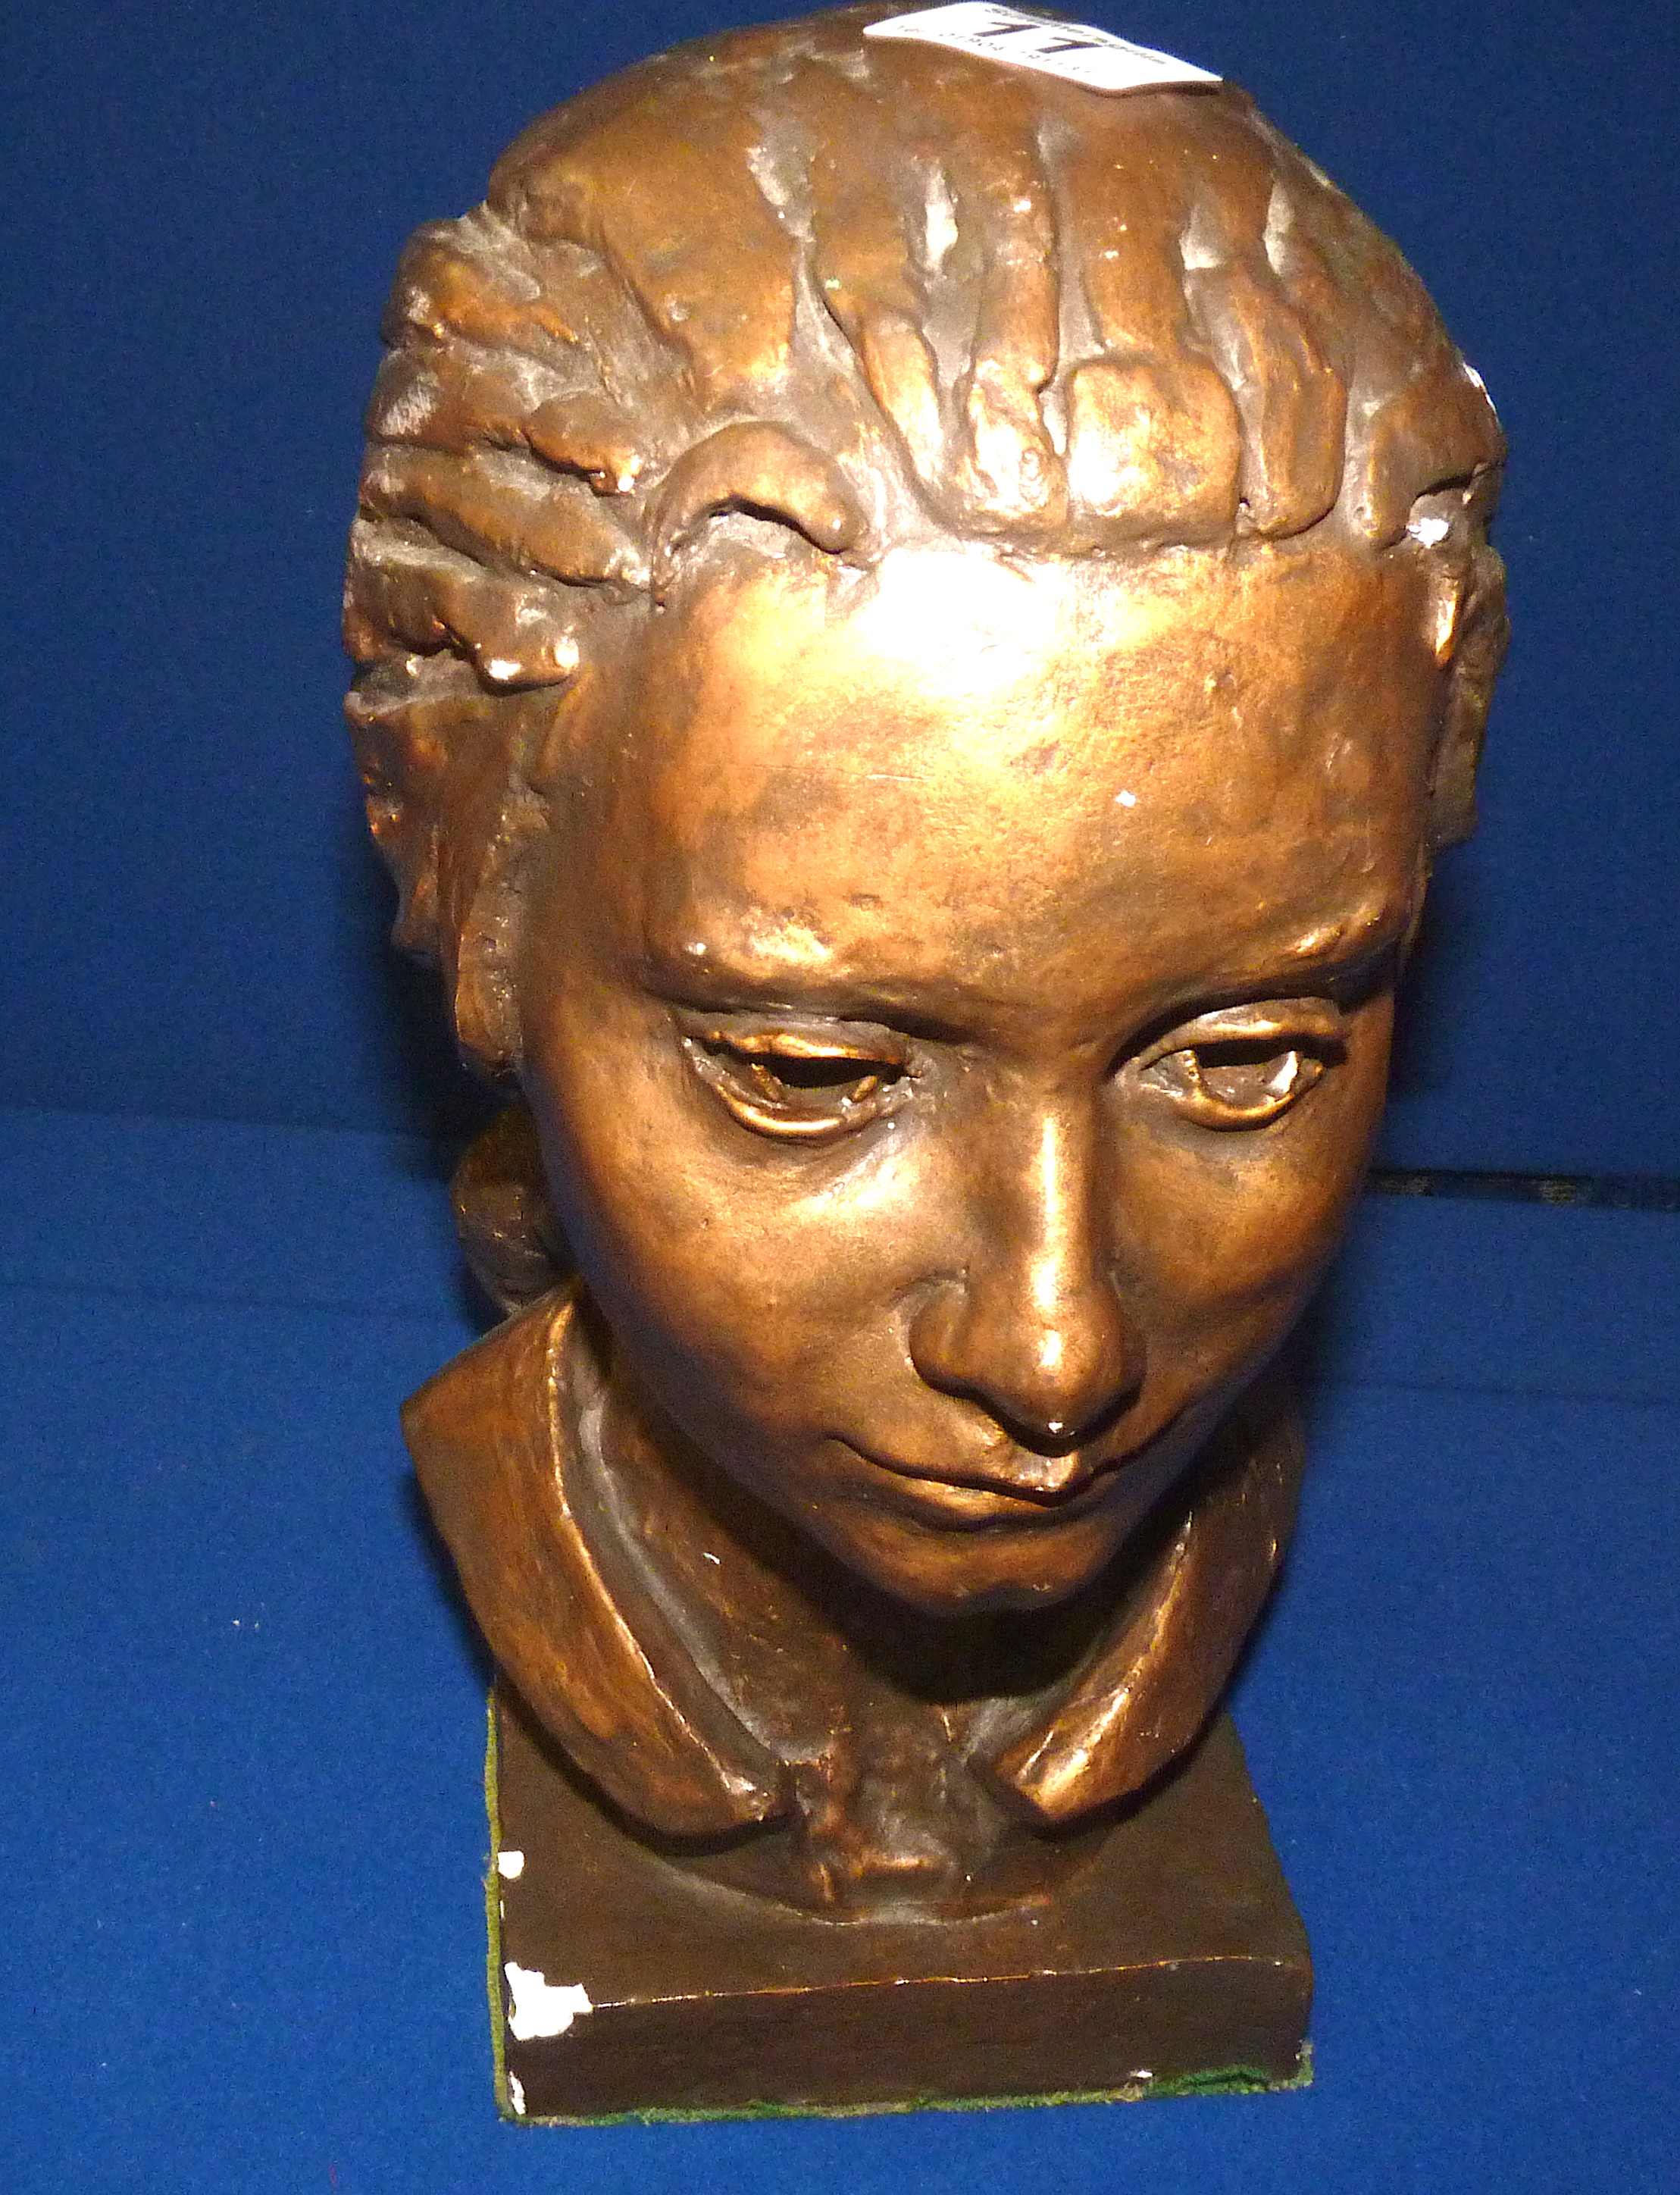 Female sculpted bust - self portrait